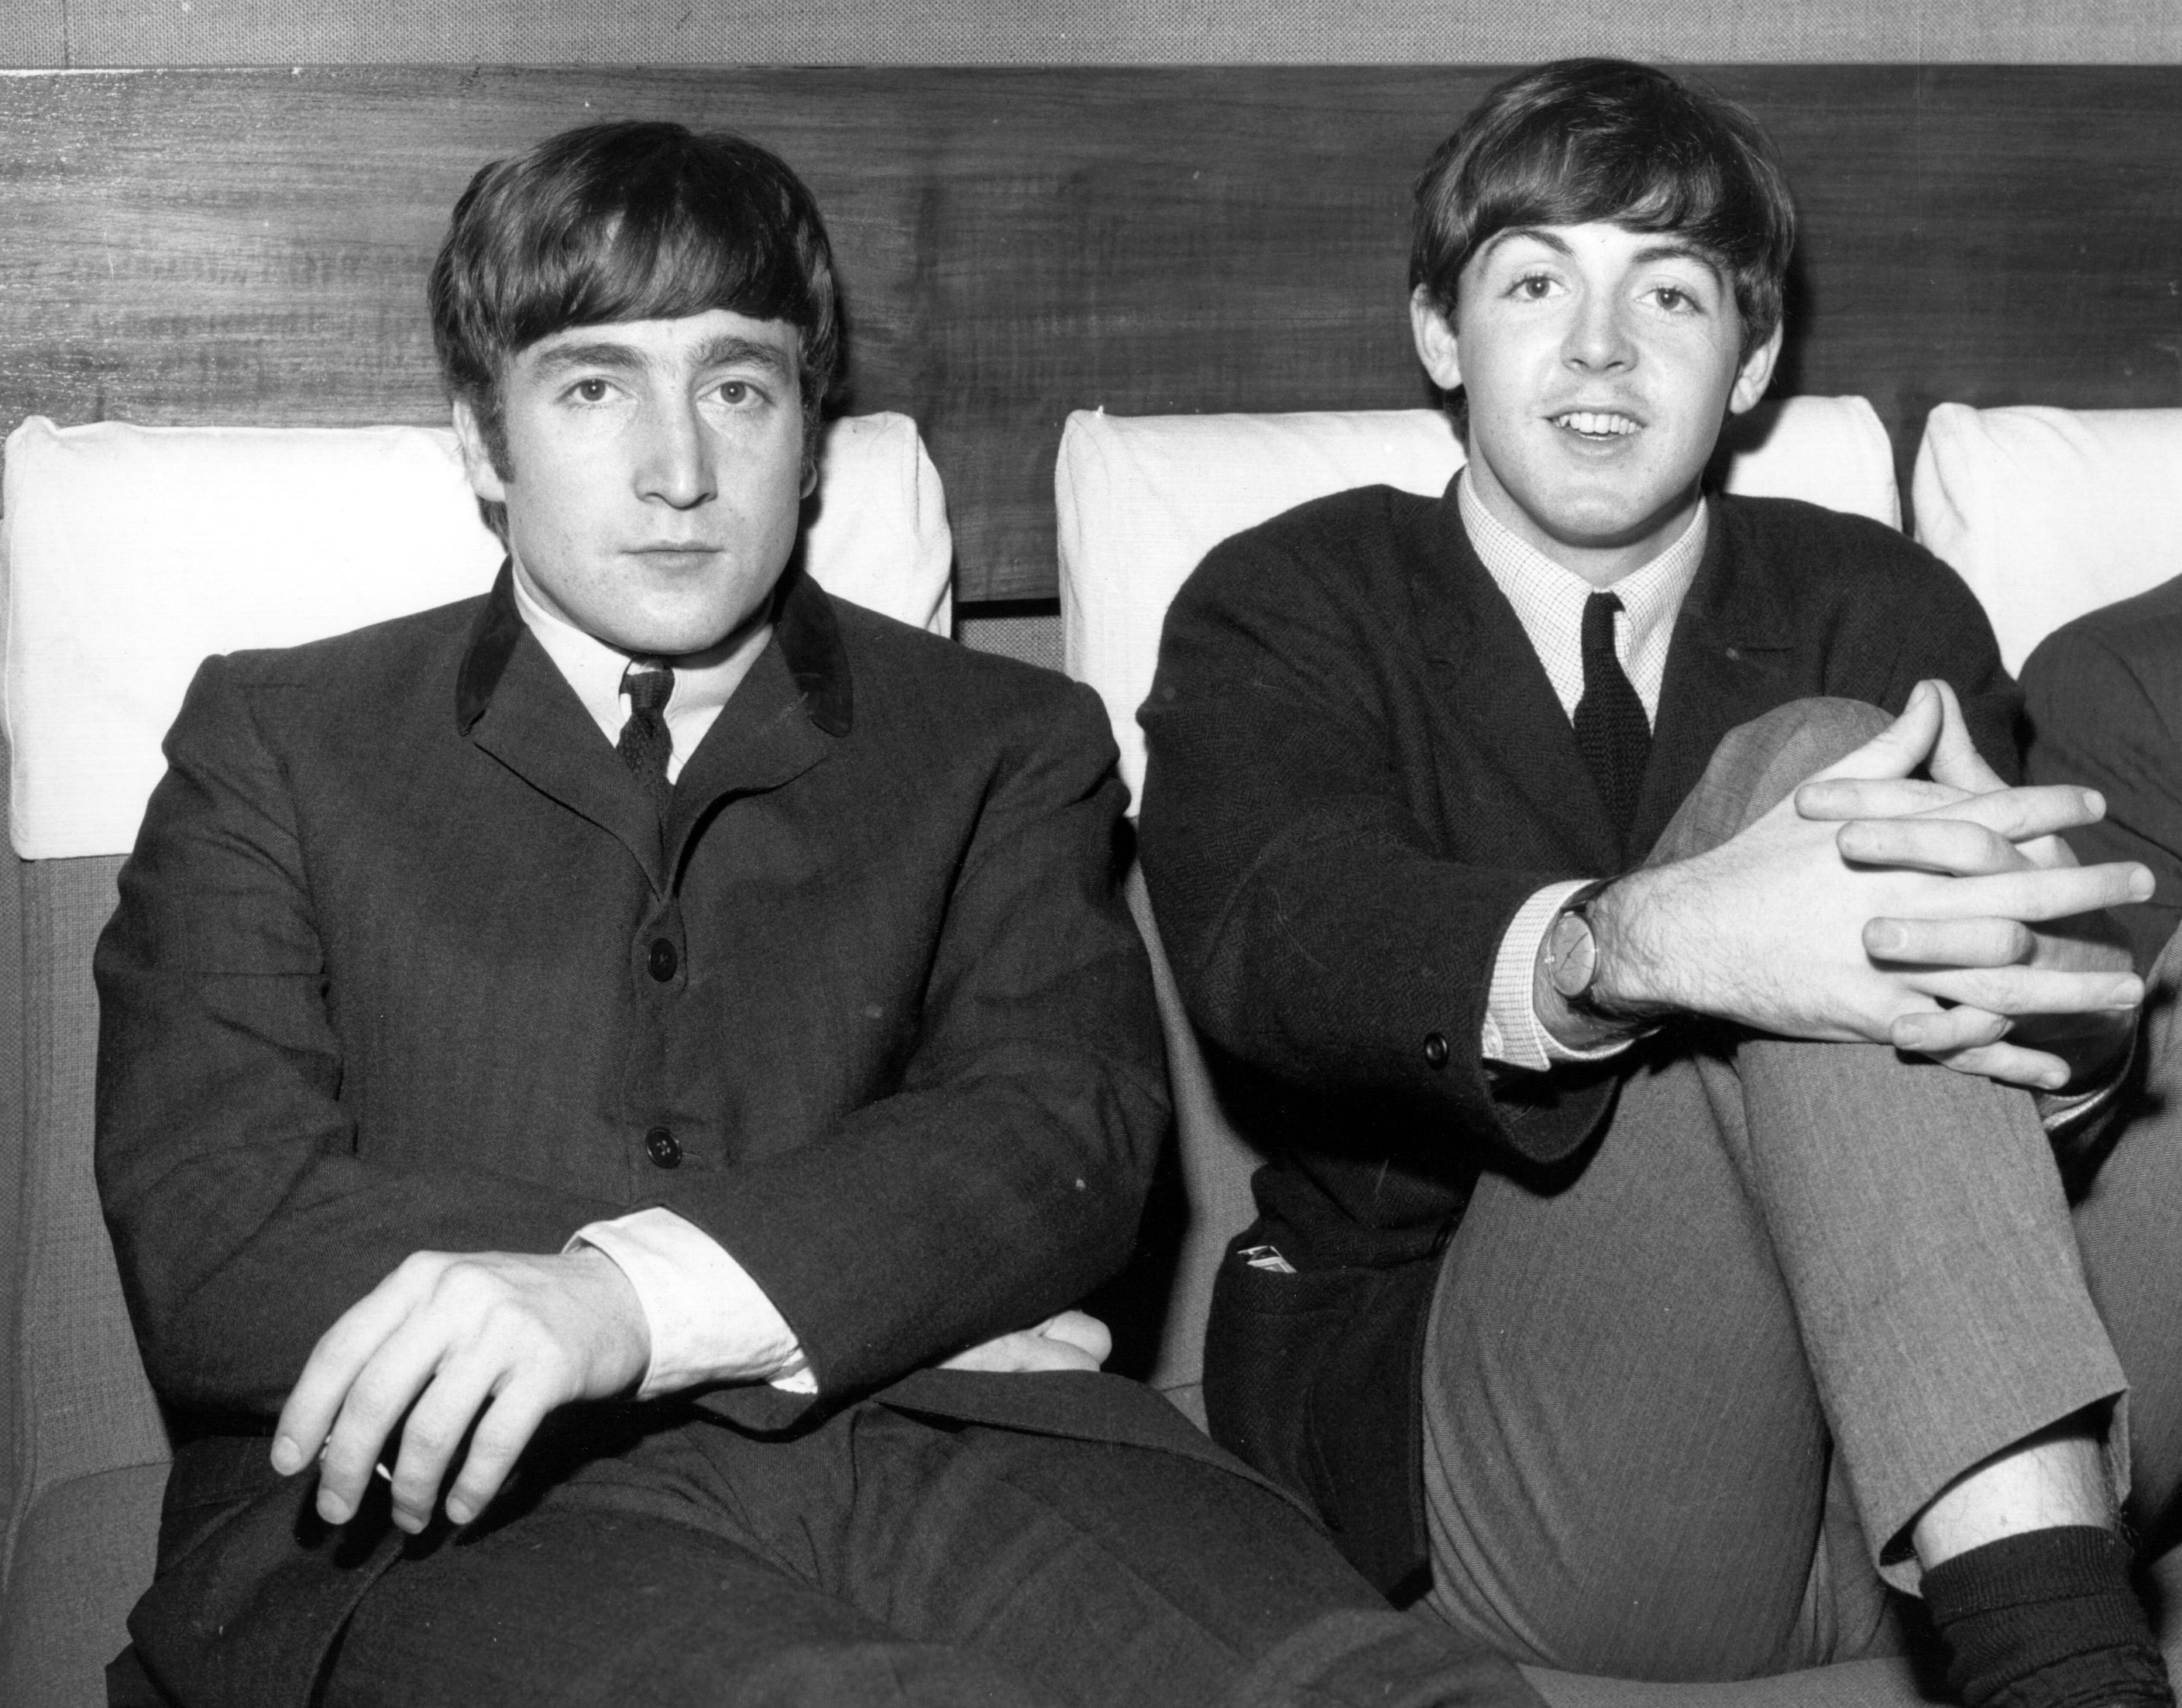 John Lennon and Paul McCartney wearing suits during The Beatles' "Nowhere Man" era